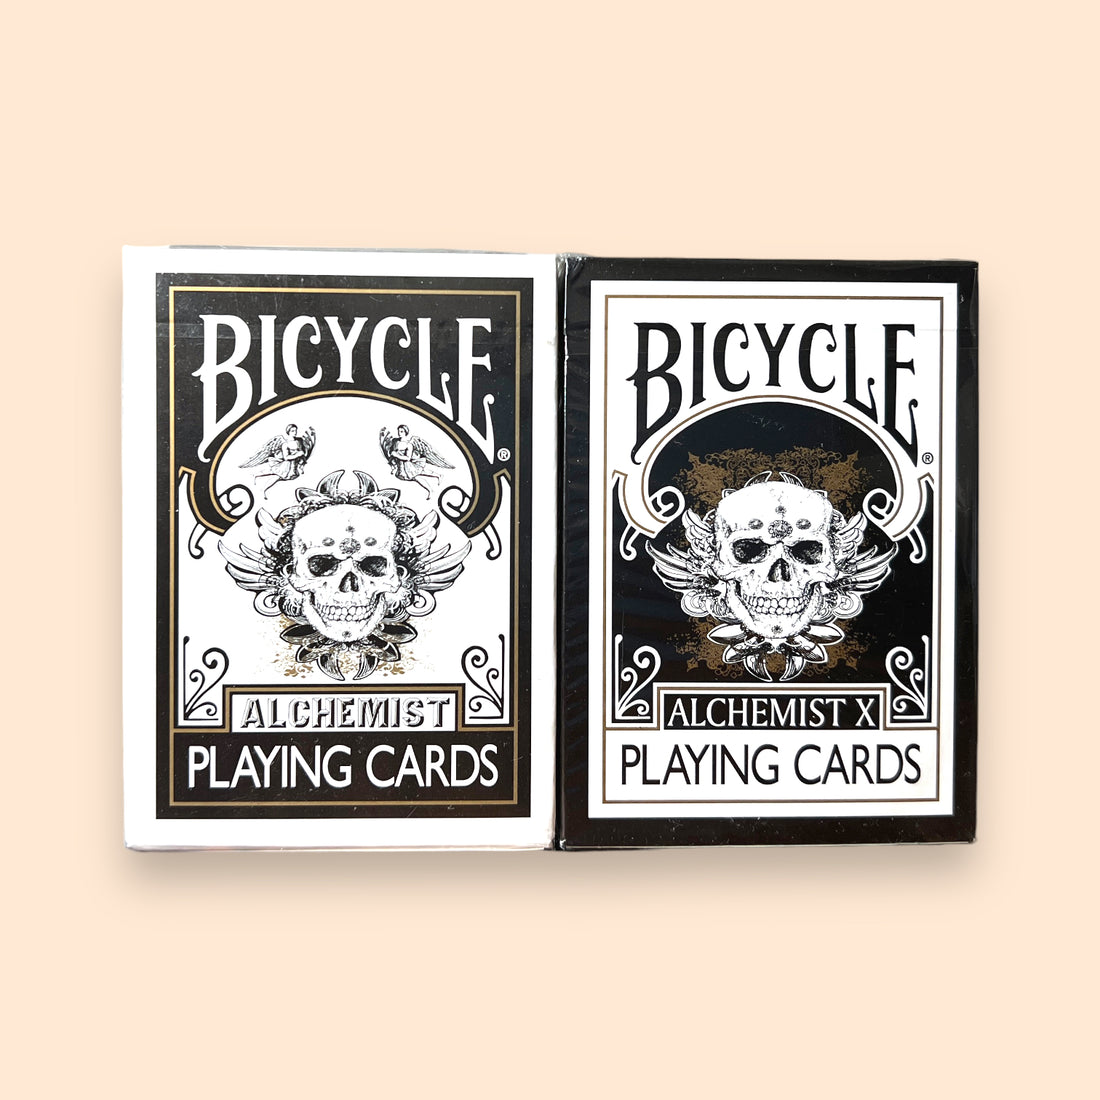 Bicycle Alchemist and Alchemist X Playing Cards